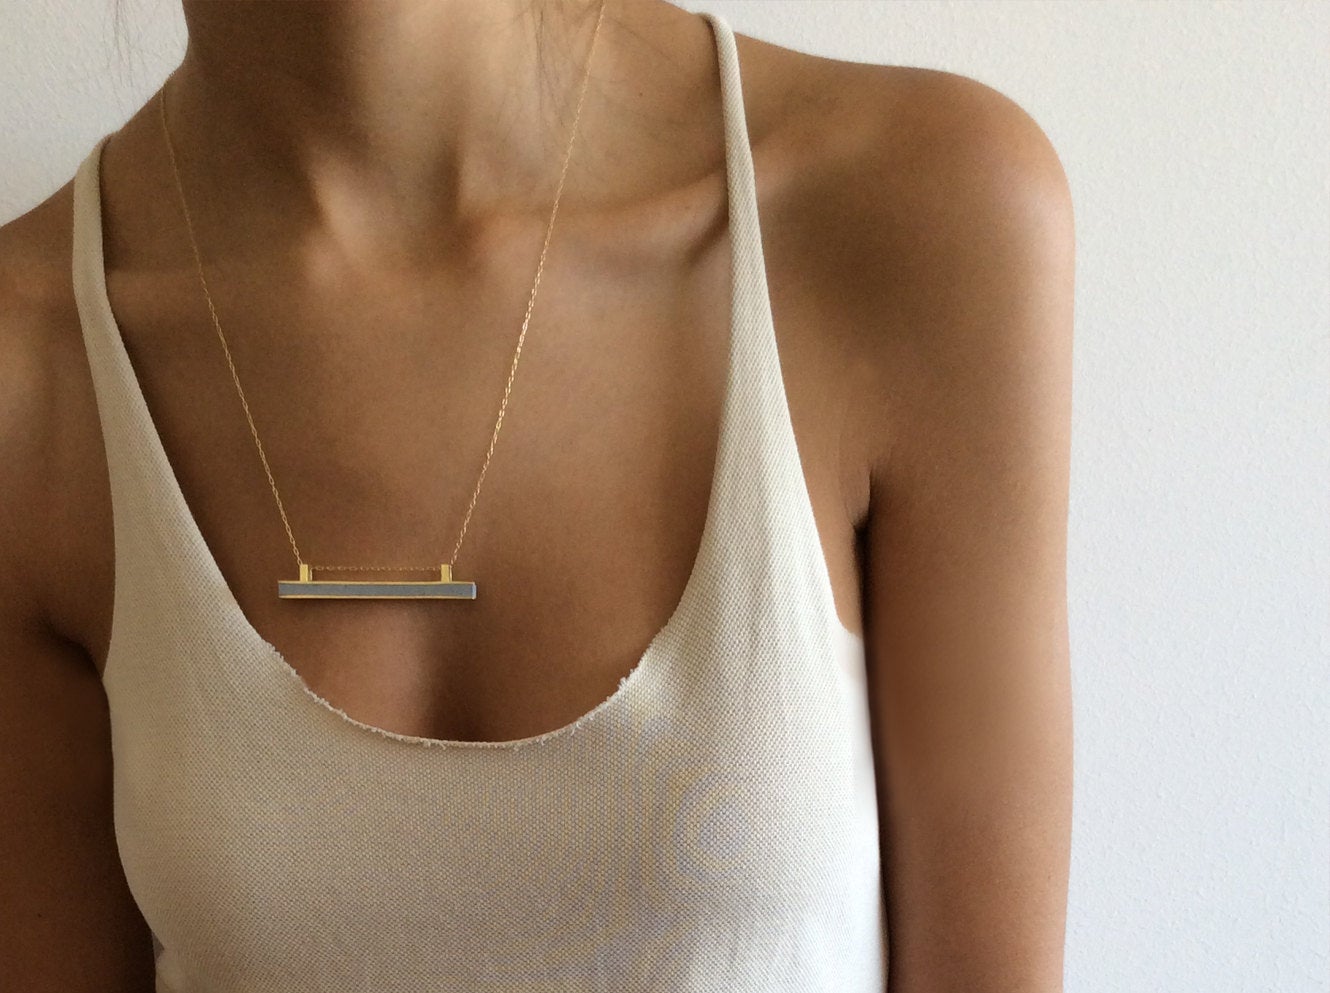 Minimalist Bar Silver line necklace - hs